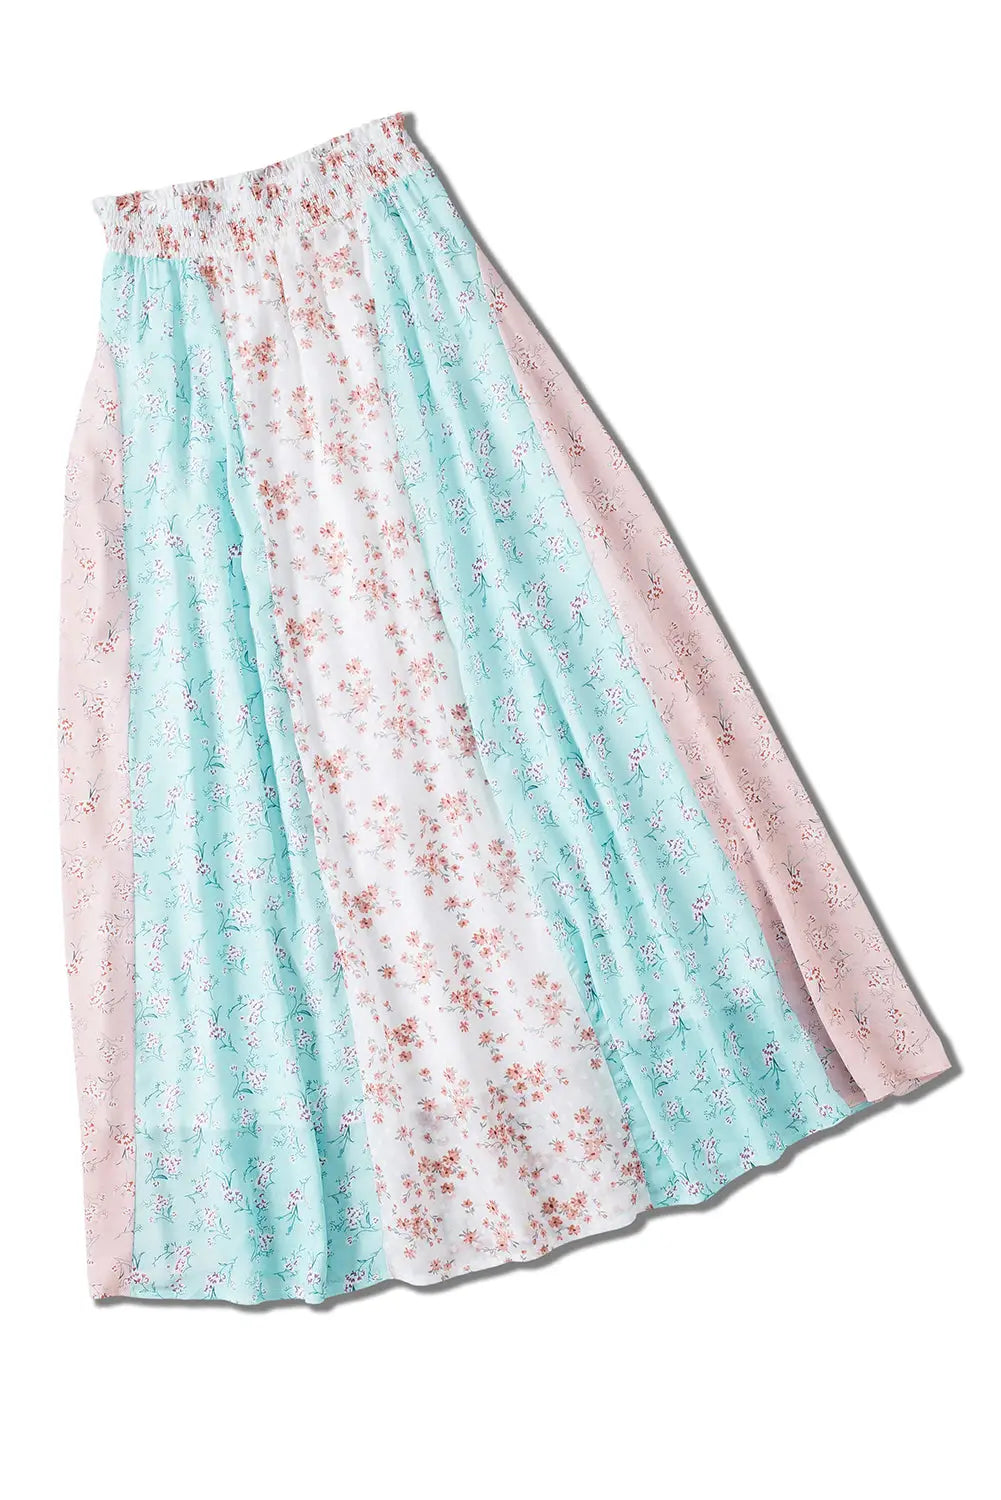 White multi floral print maxi skirt - skirts